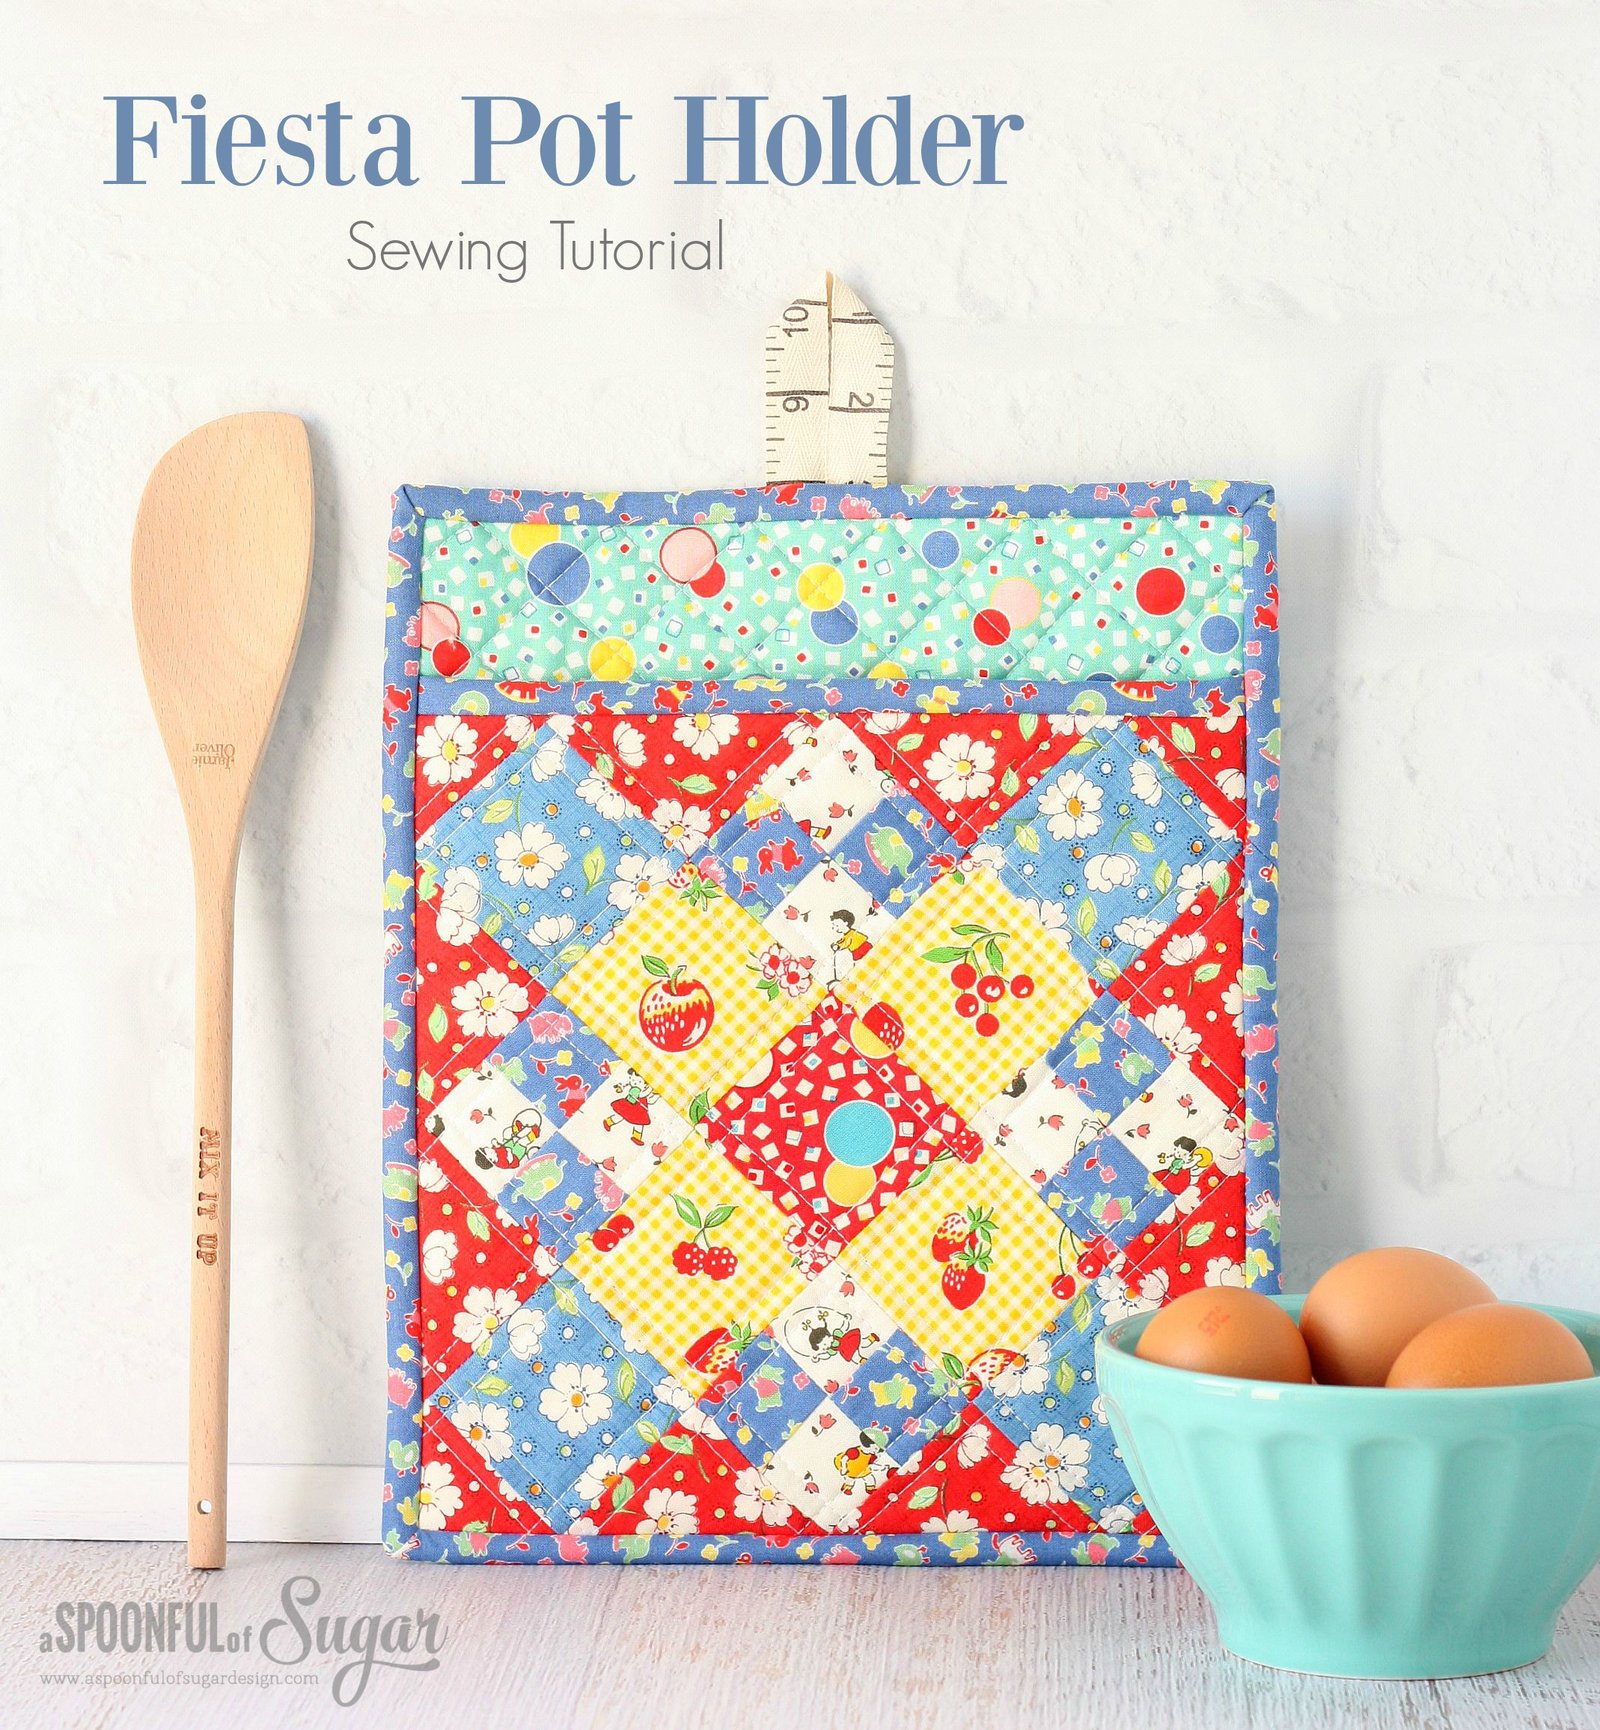 Fiesta Pot Holder sewing tutorial by www.aspoonfulofsugardesigns.com